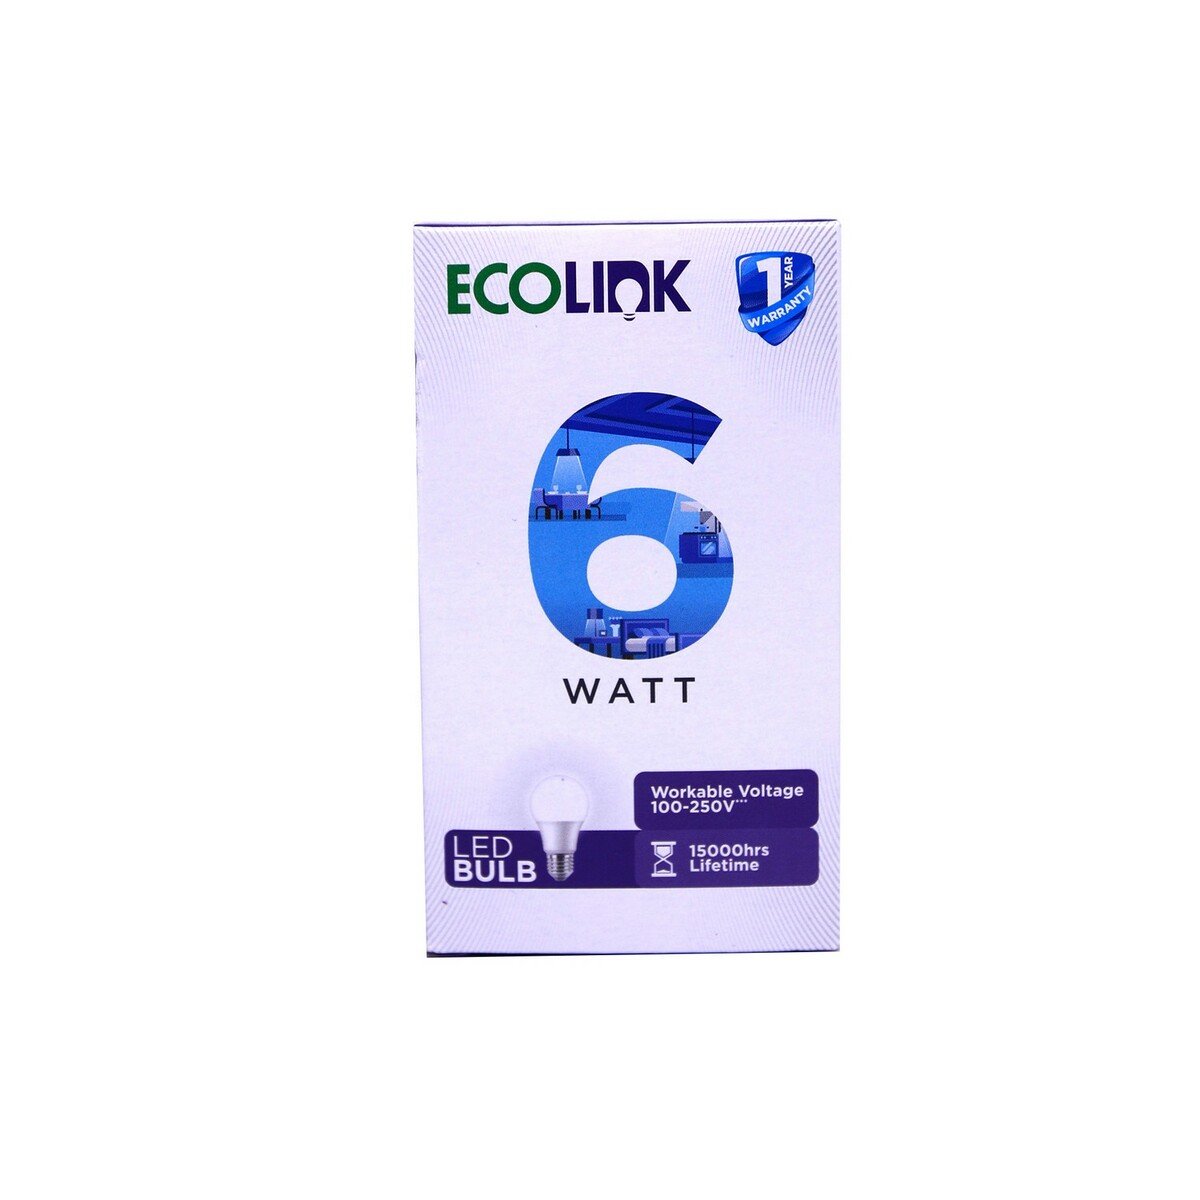 Ecolink LED Bulb 6 WATT 